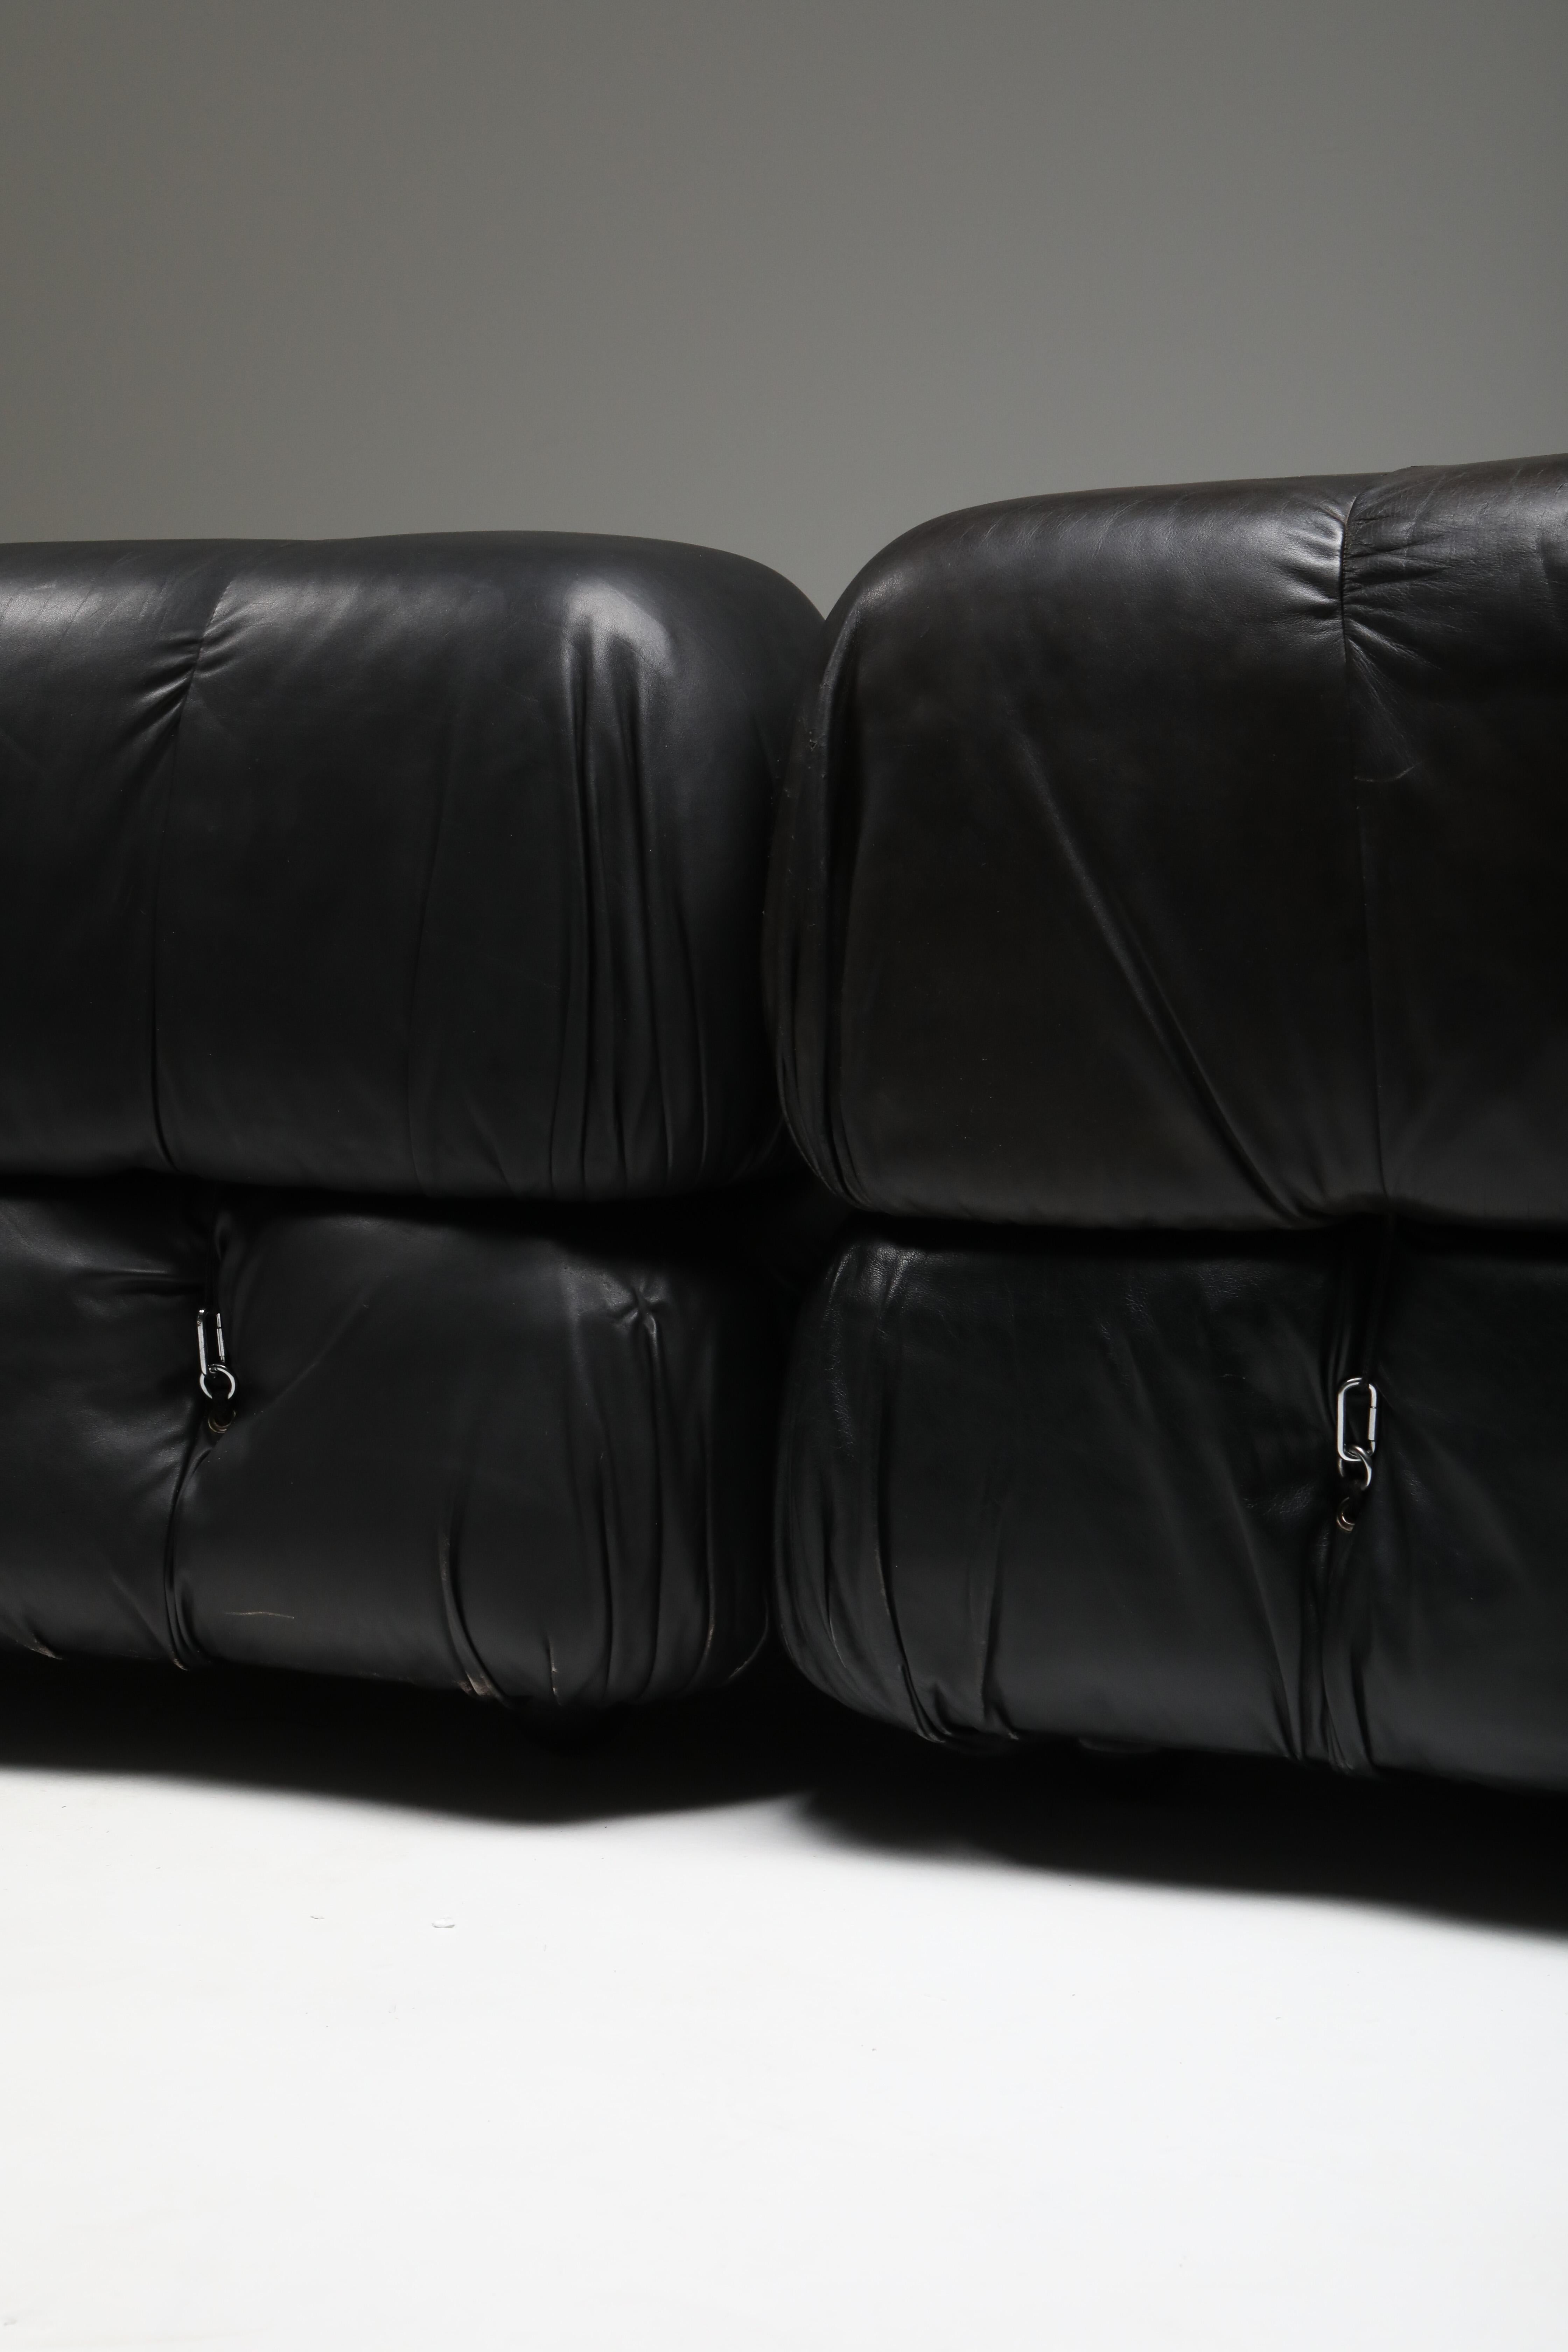 Camaleonda Black Leather Lounge chair 3